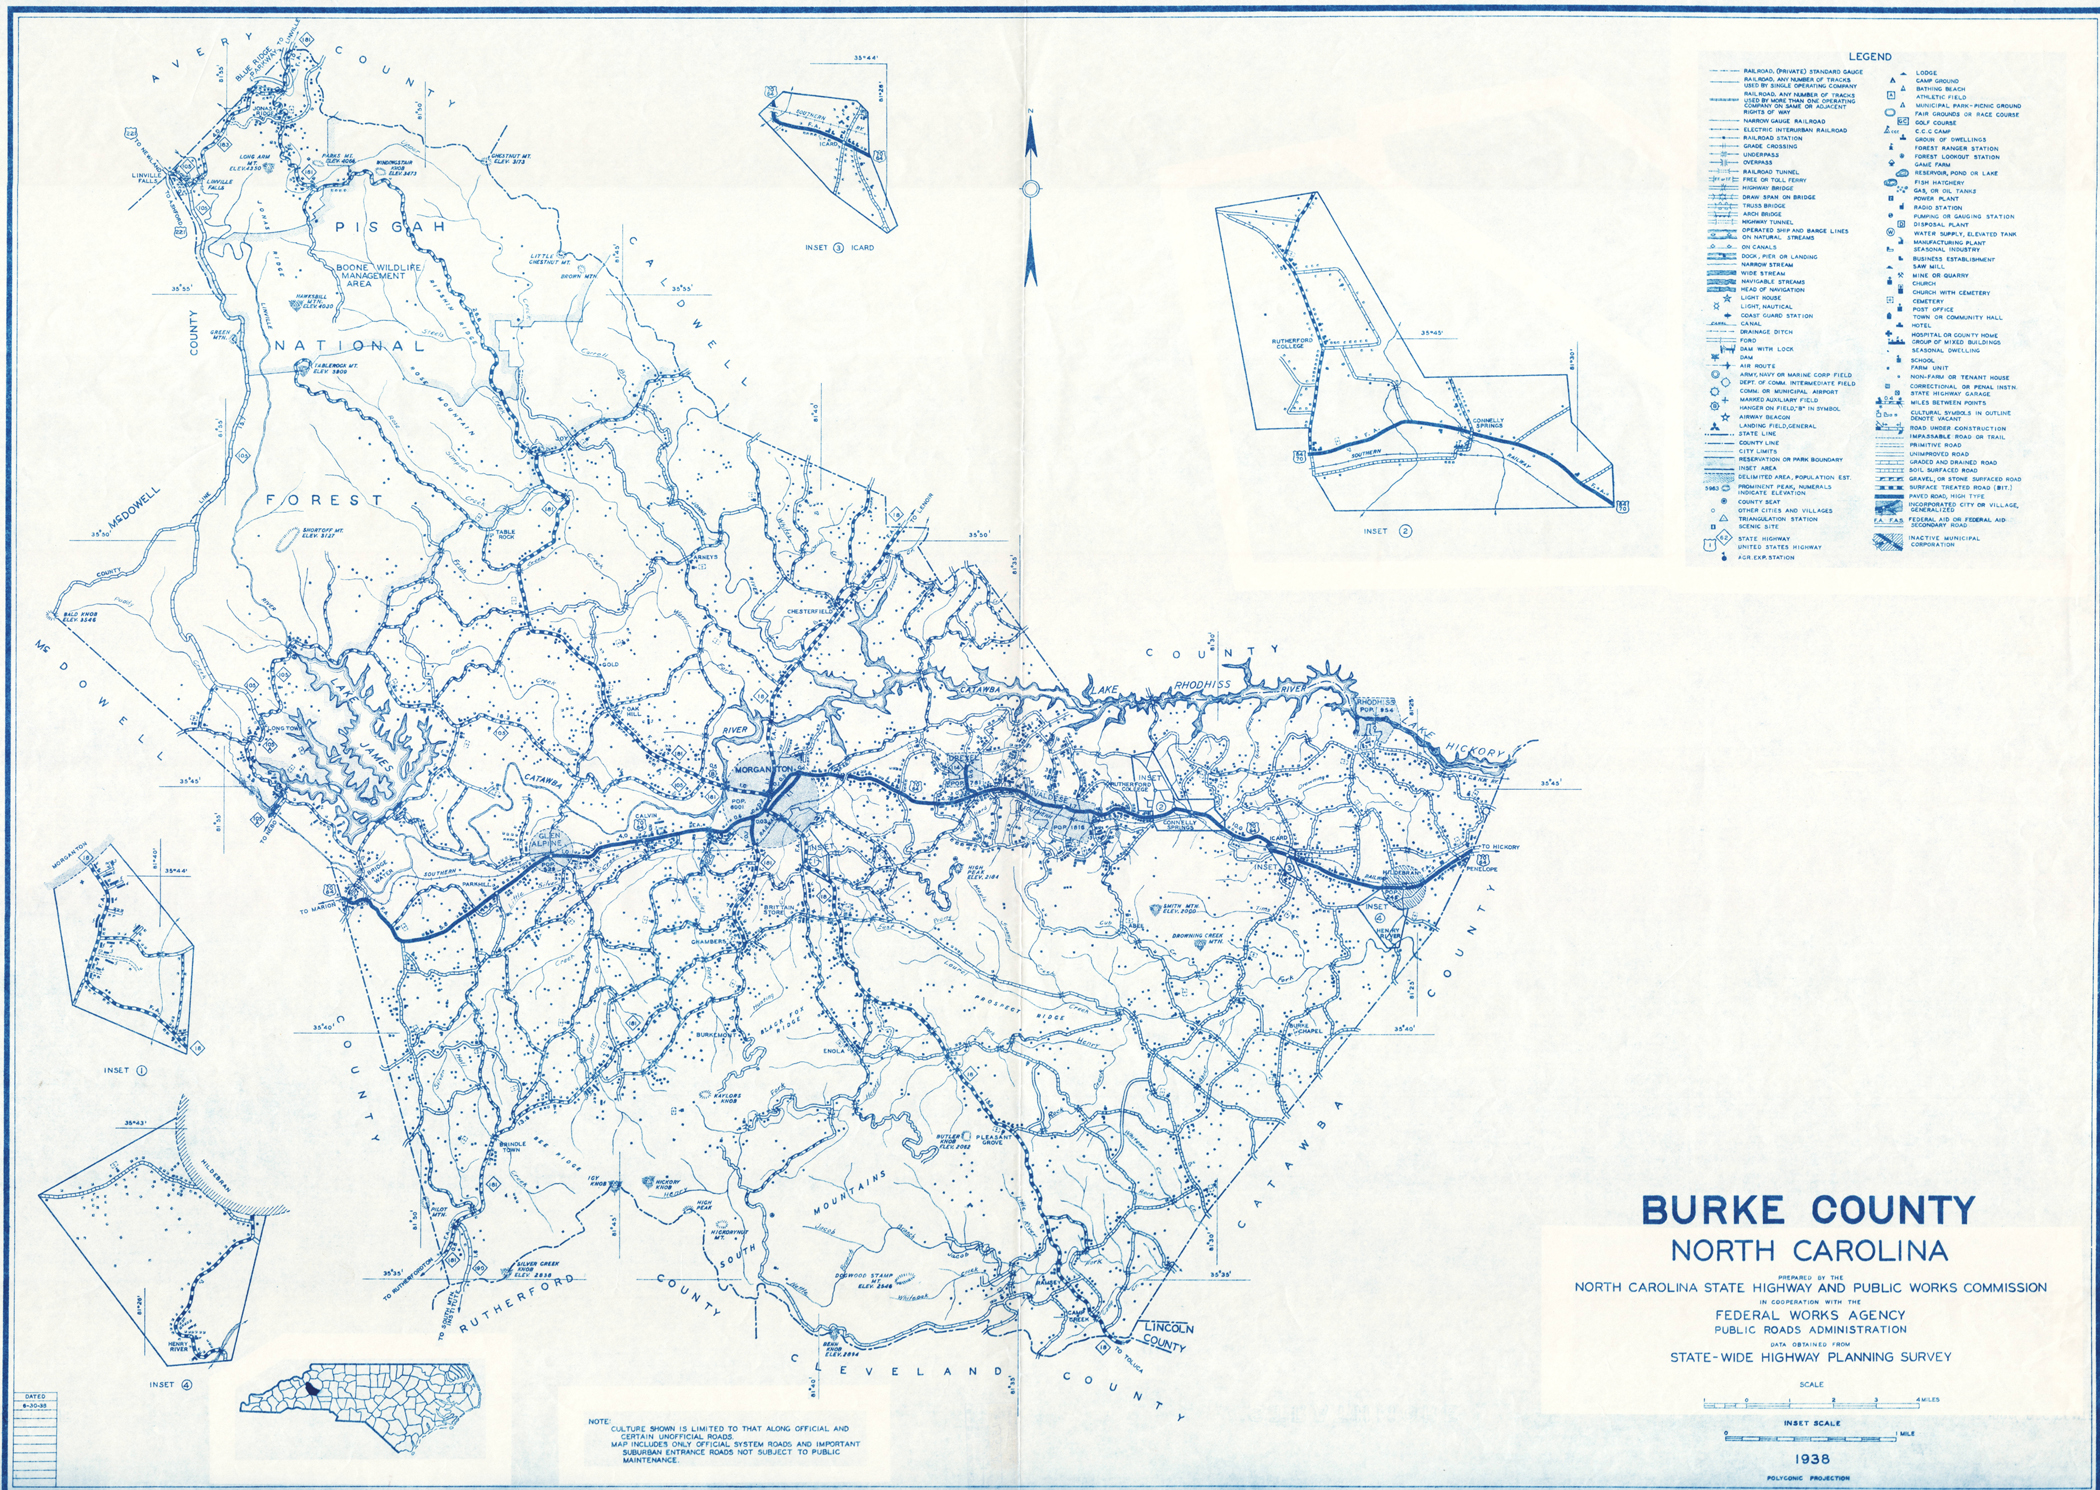 1938 Road Map Of Burke County North Carolina